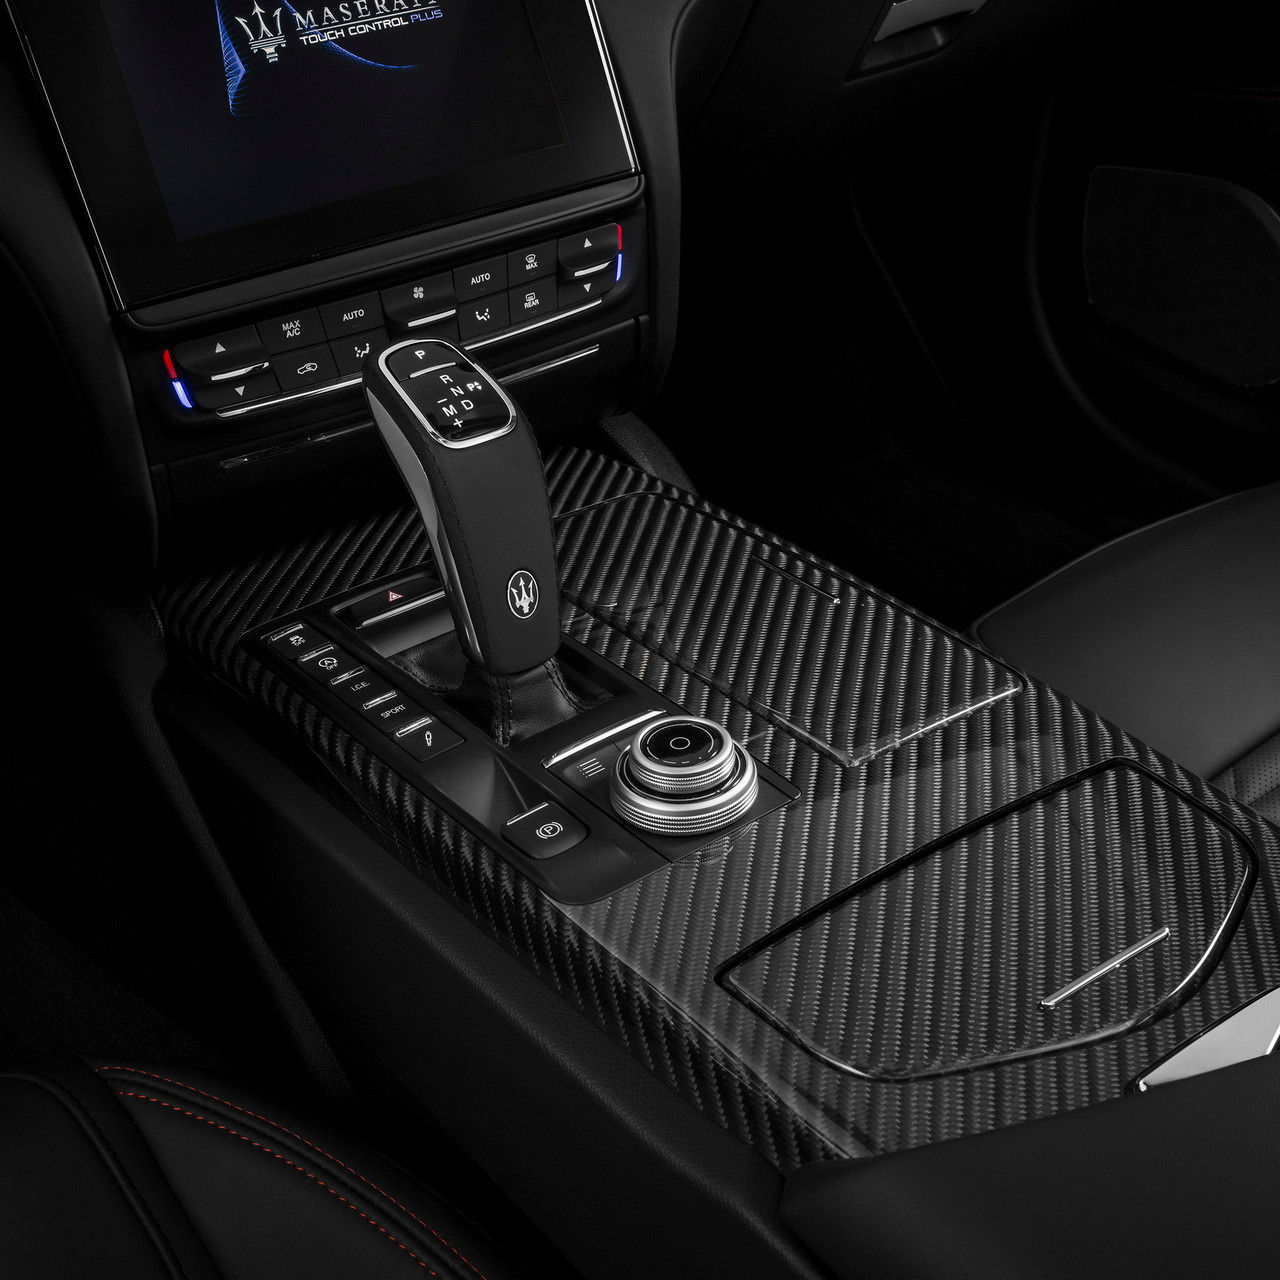 Maserati Quattroporte Innenausstattung - Kupplung Detail - Automatikgetriebe